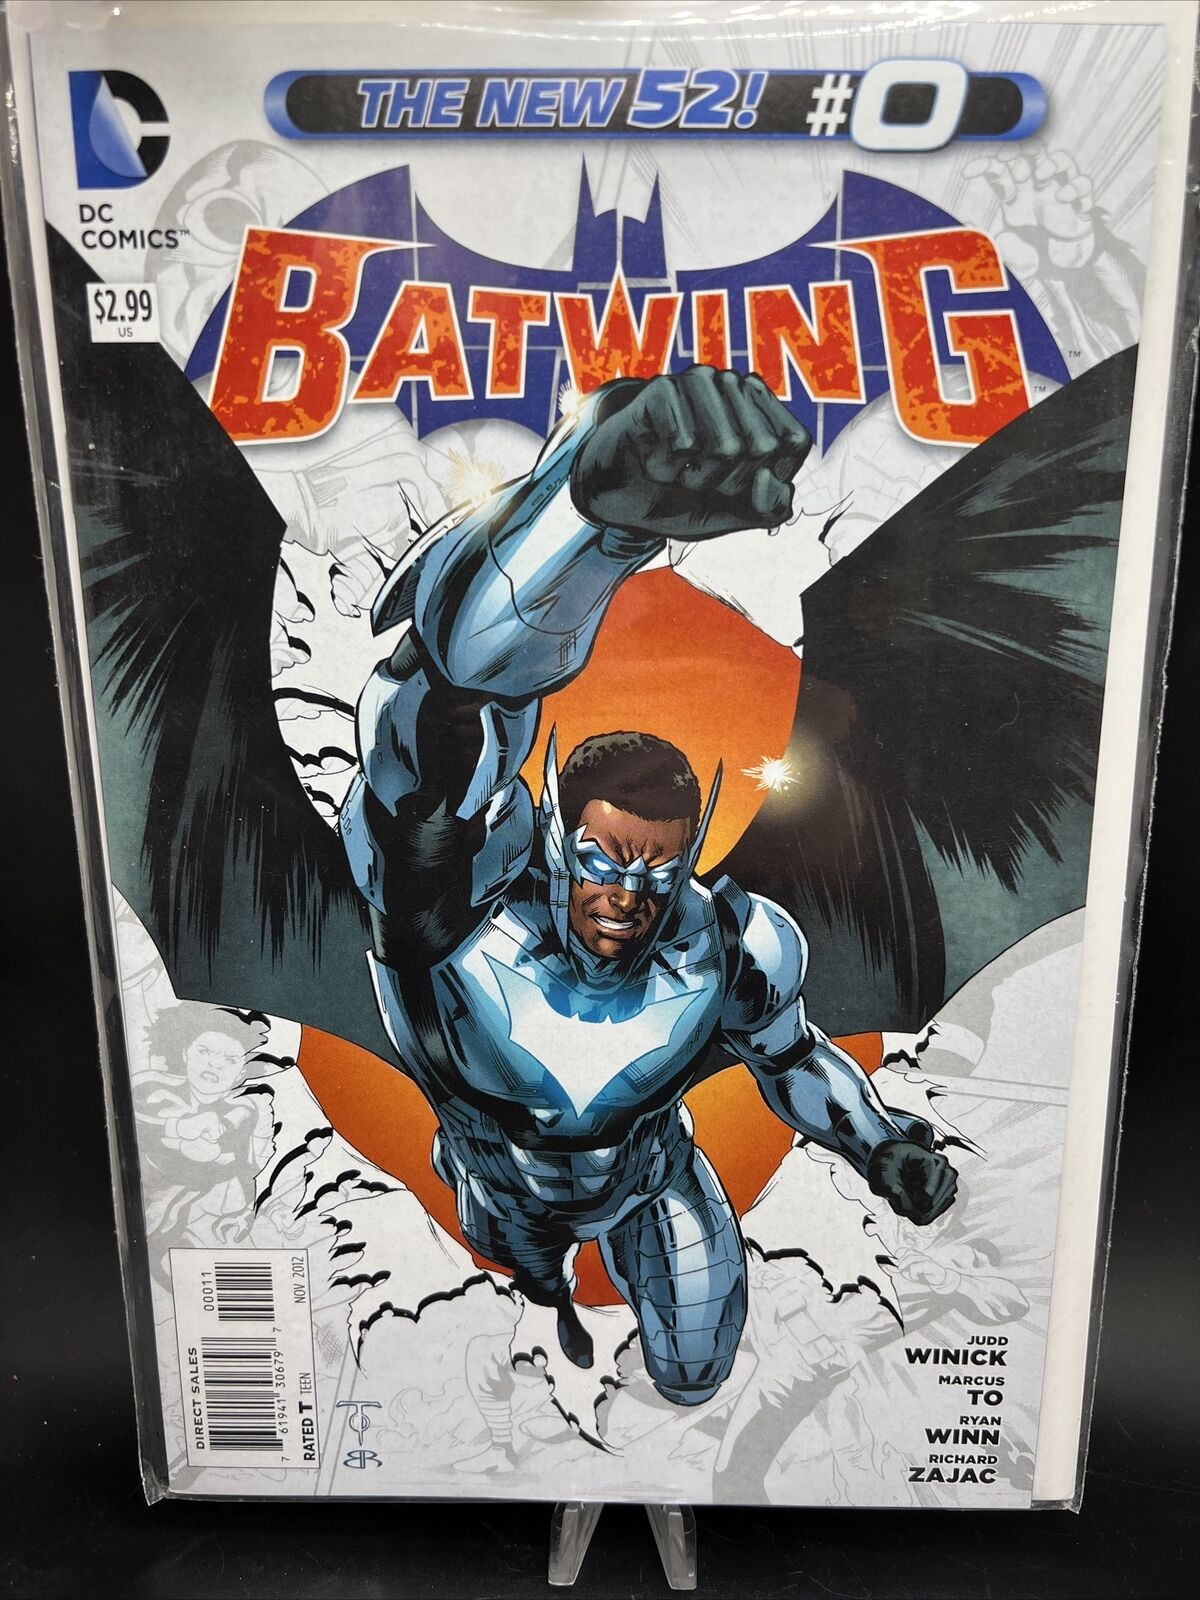 DC Comics Batwing The new 52 #0 Judd Winick Marcus To Ryan Winn Richard Zajac